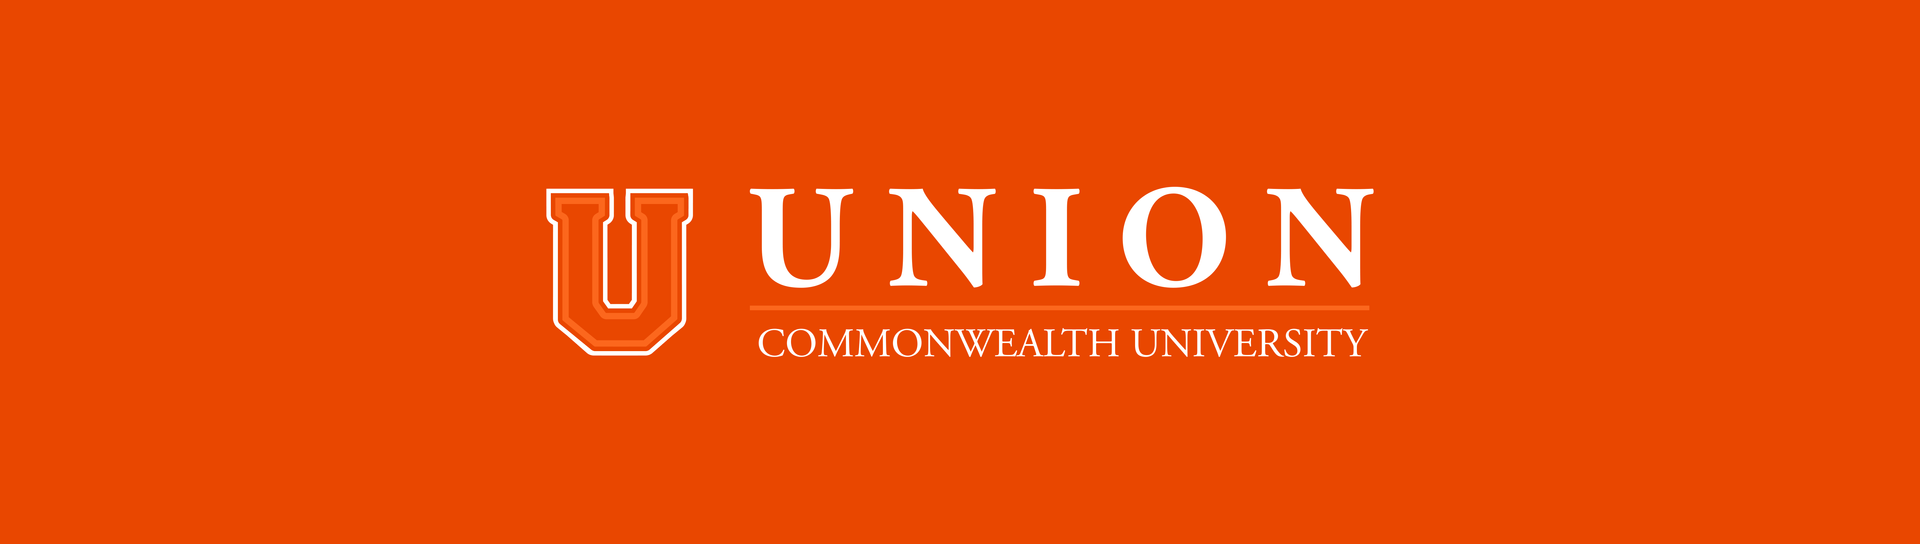 logo reading Union Commonwealth University